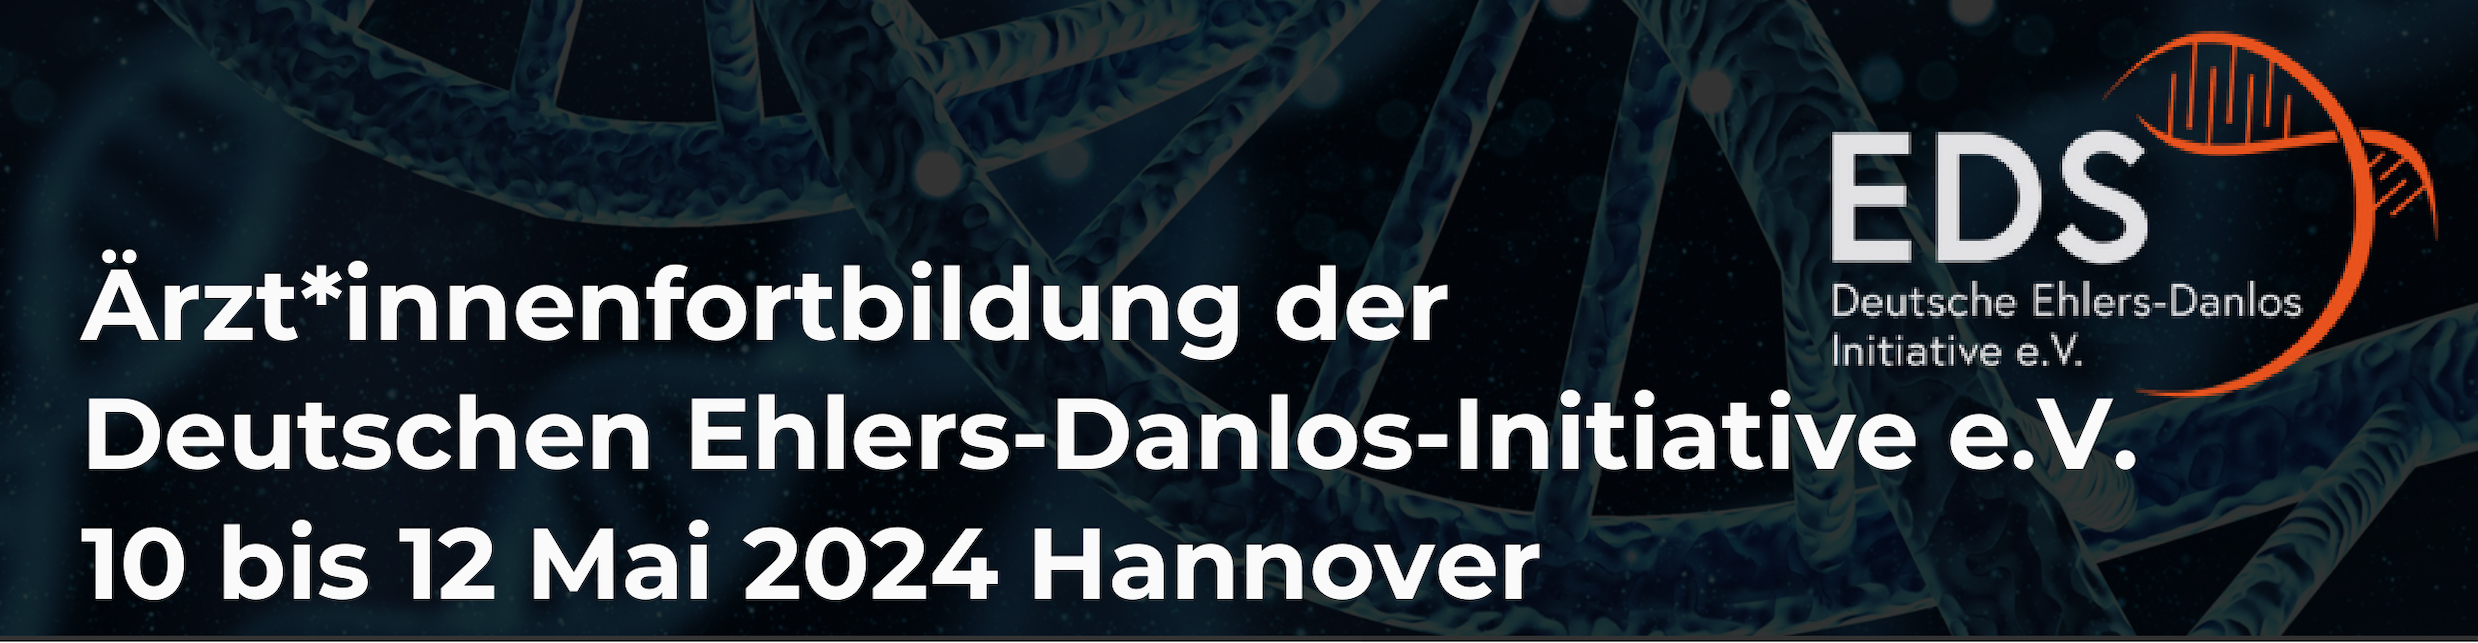 Deutsche Ehlers-Danlos-Initiative